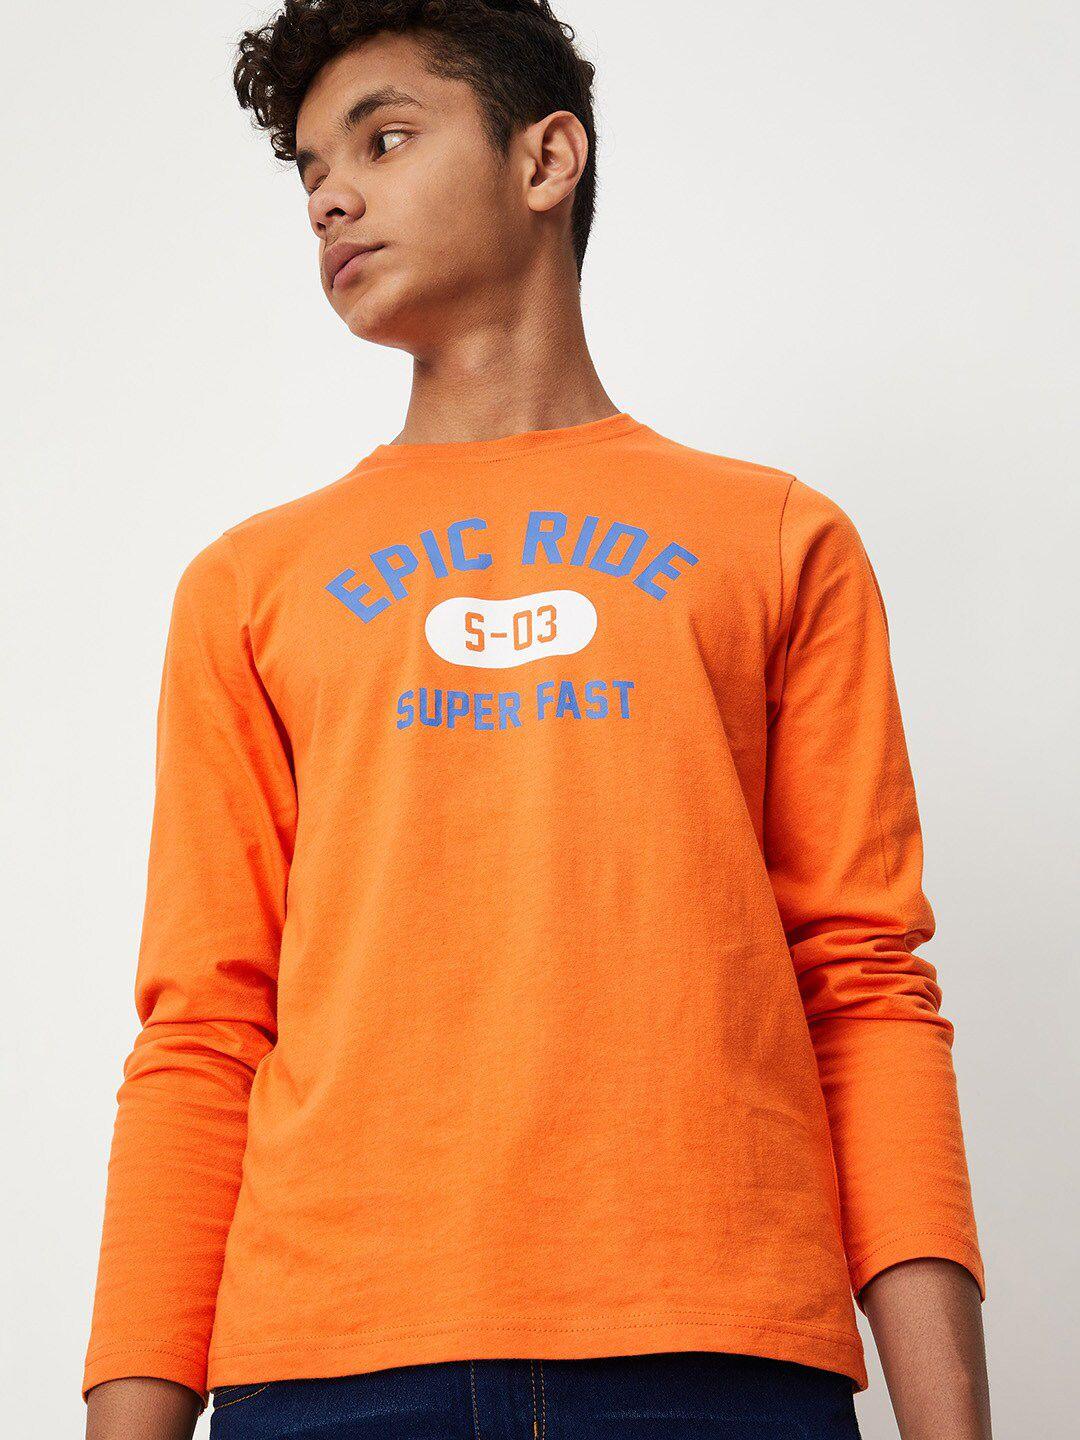 max Boys Orange Typography Printed Cotton T-shirt